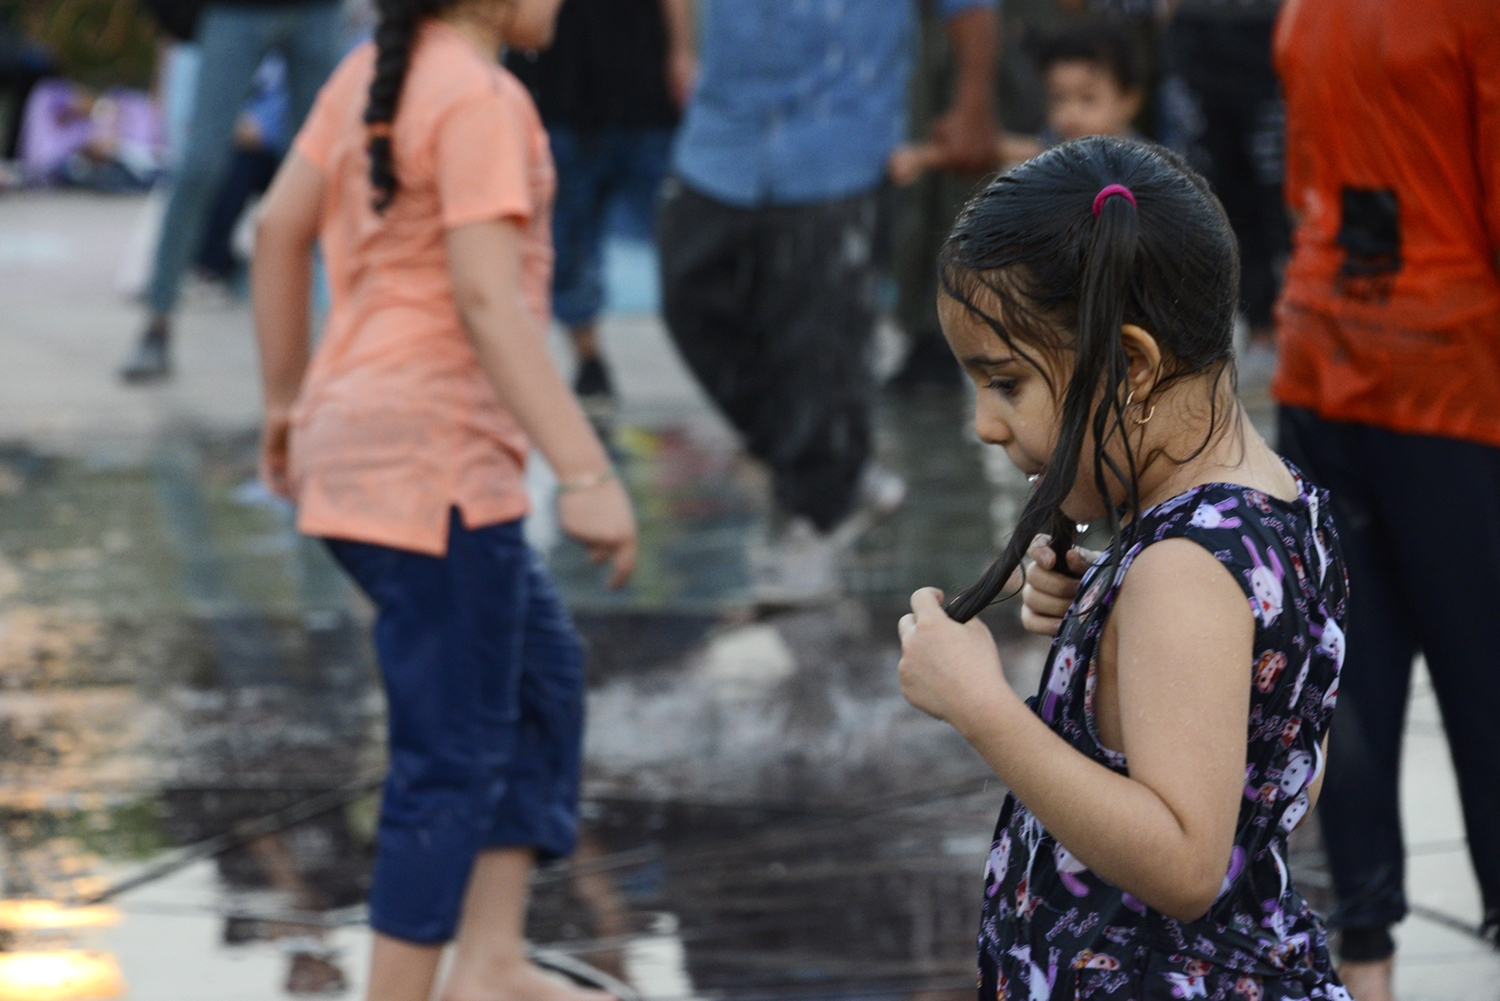 "Ab-o-Atash Park Tehran, Iran people enjoying water fountains"